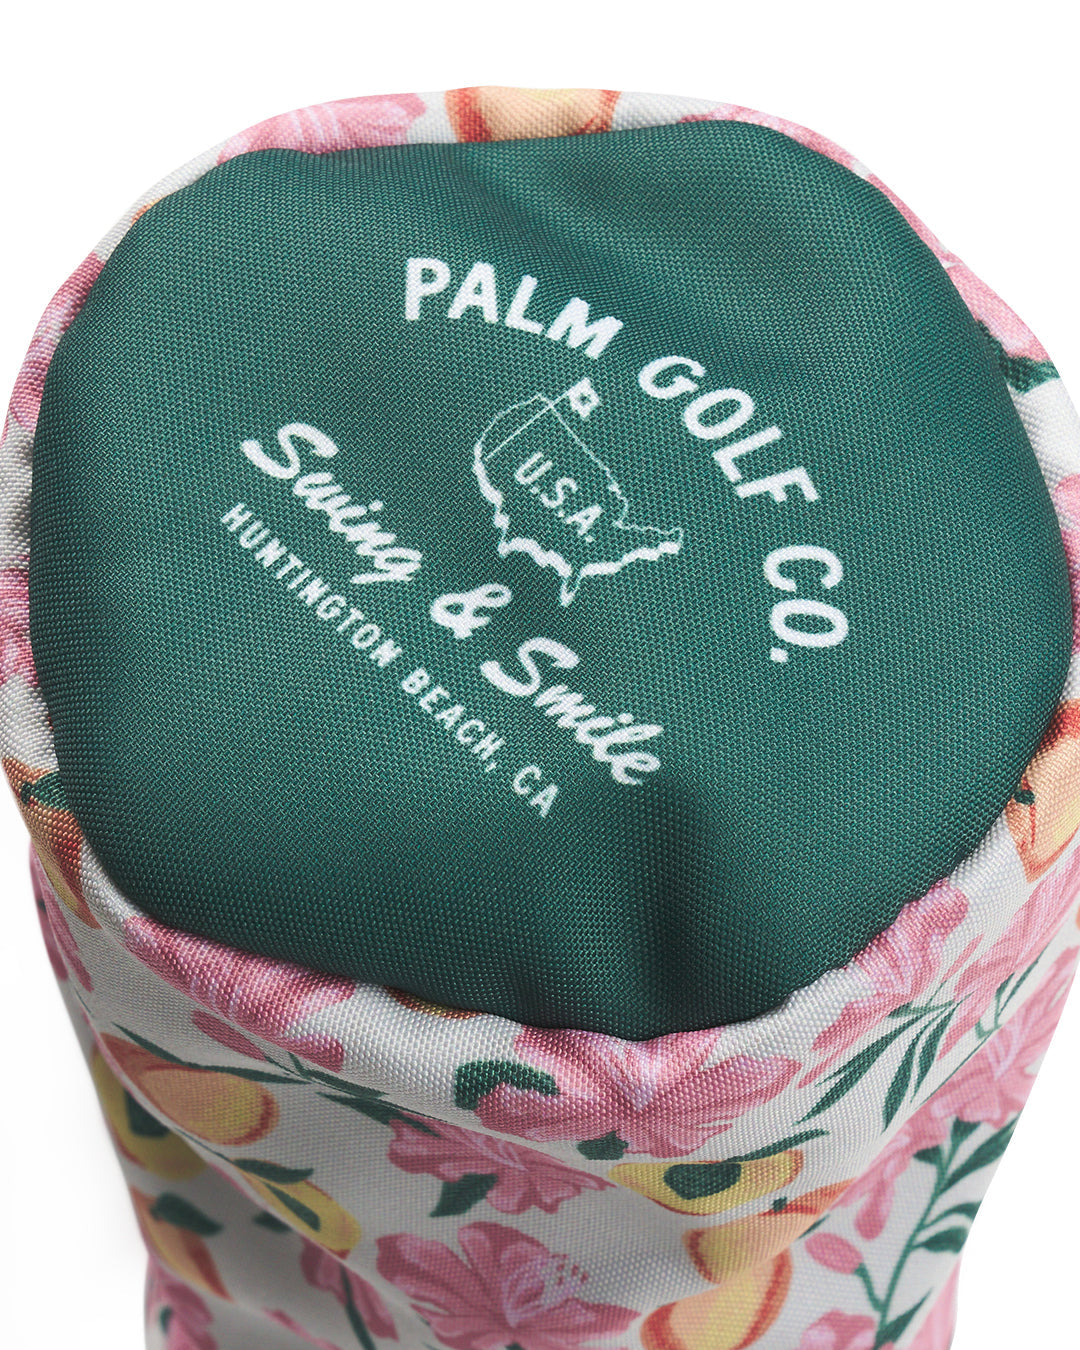 Palm Golf Co. Keep It Peachy Headcover